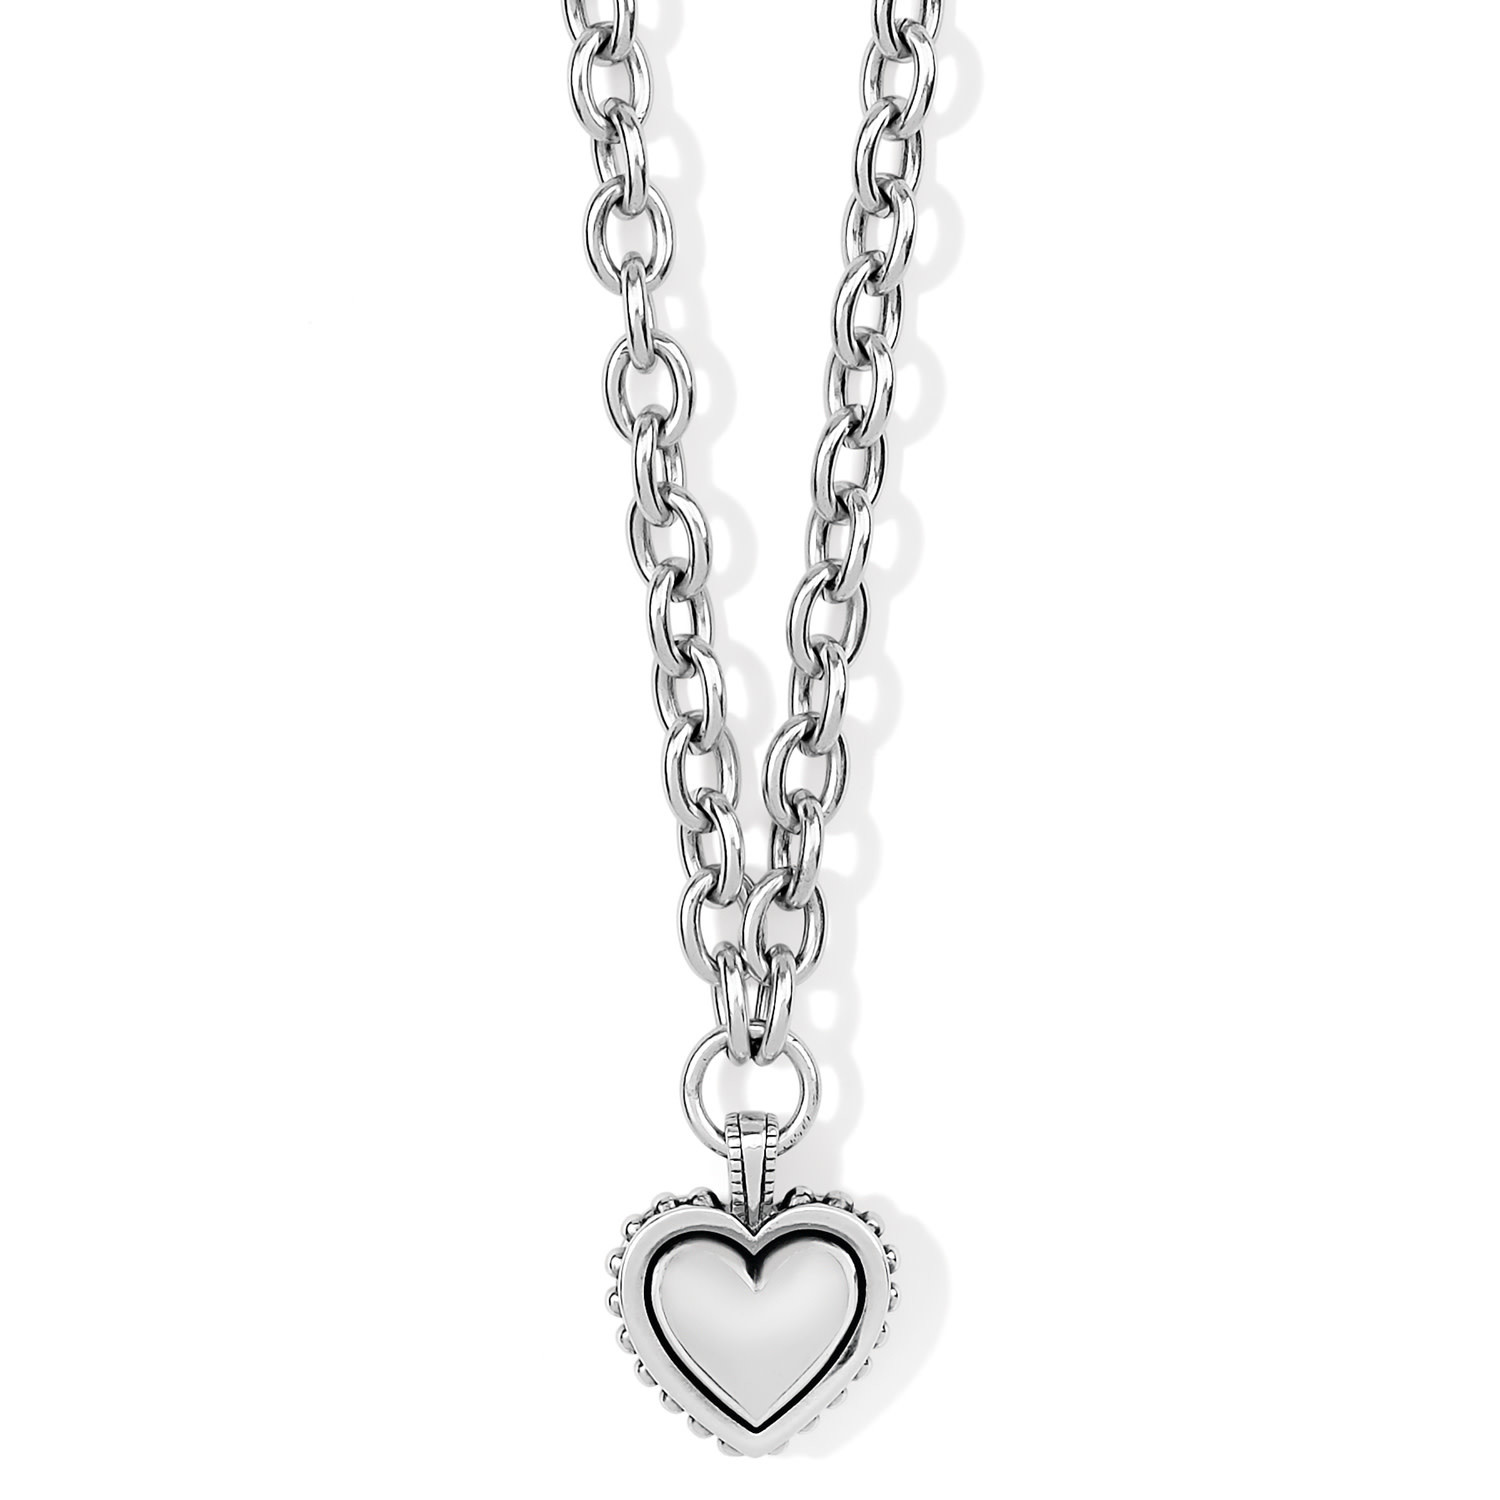 BRIGHTON Silver Tone Heart LOVE Multi Color Enamel pendant necklace 18